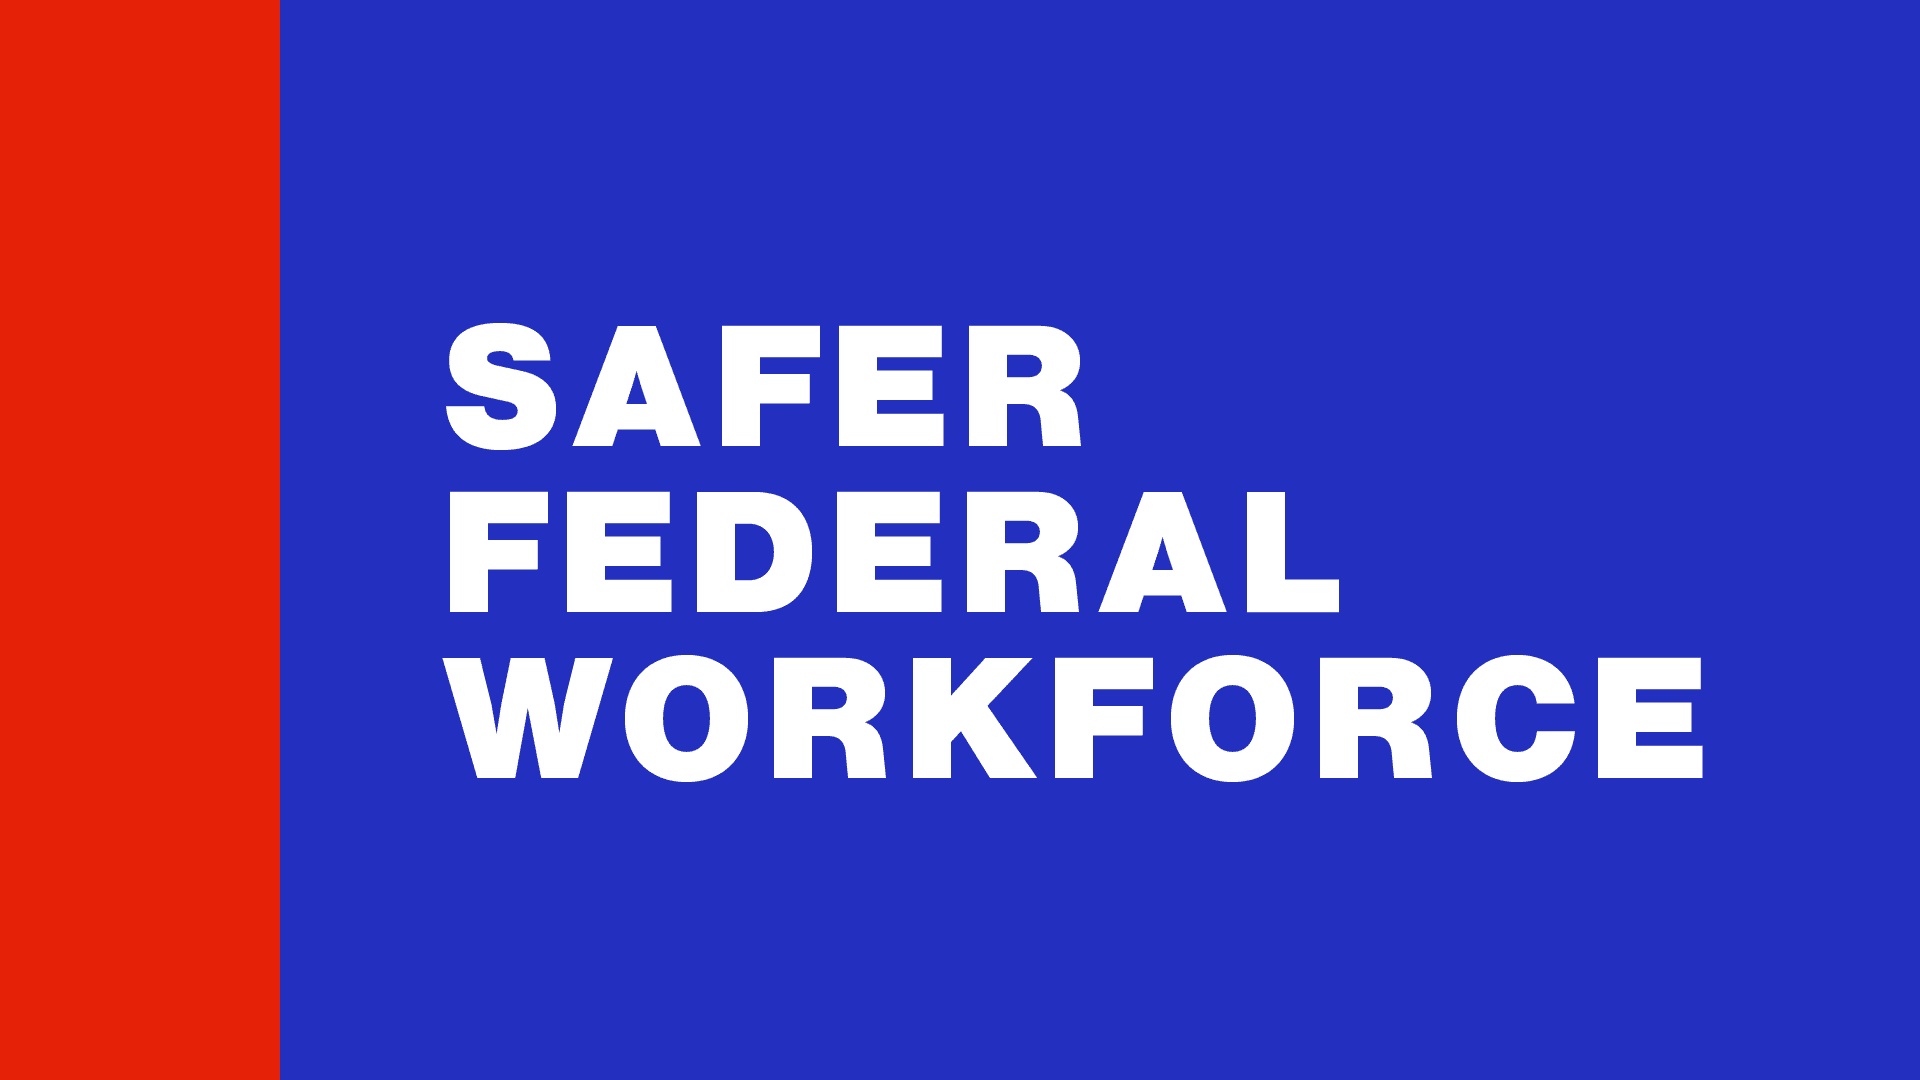 www.saferfederalworkforce.gov